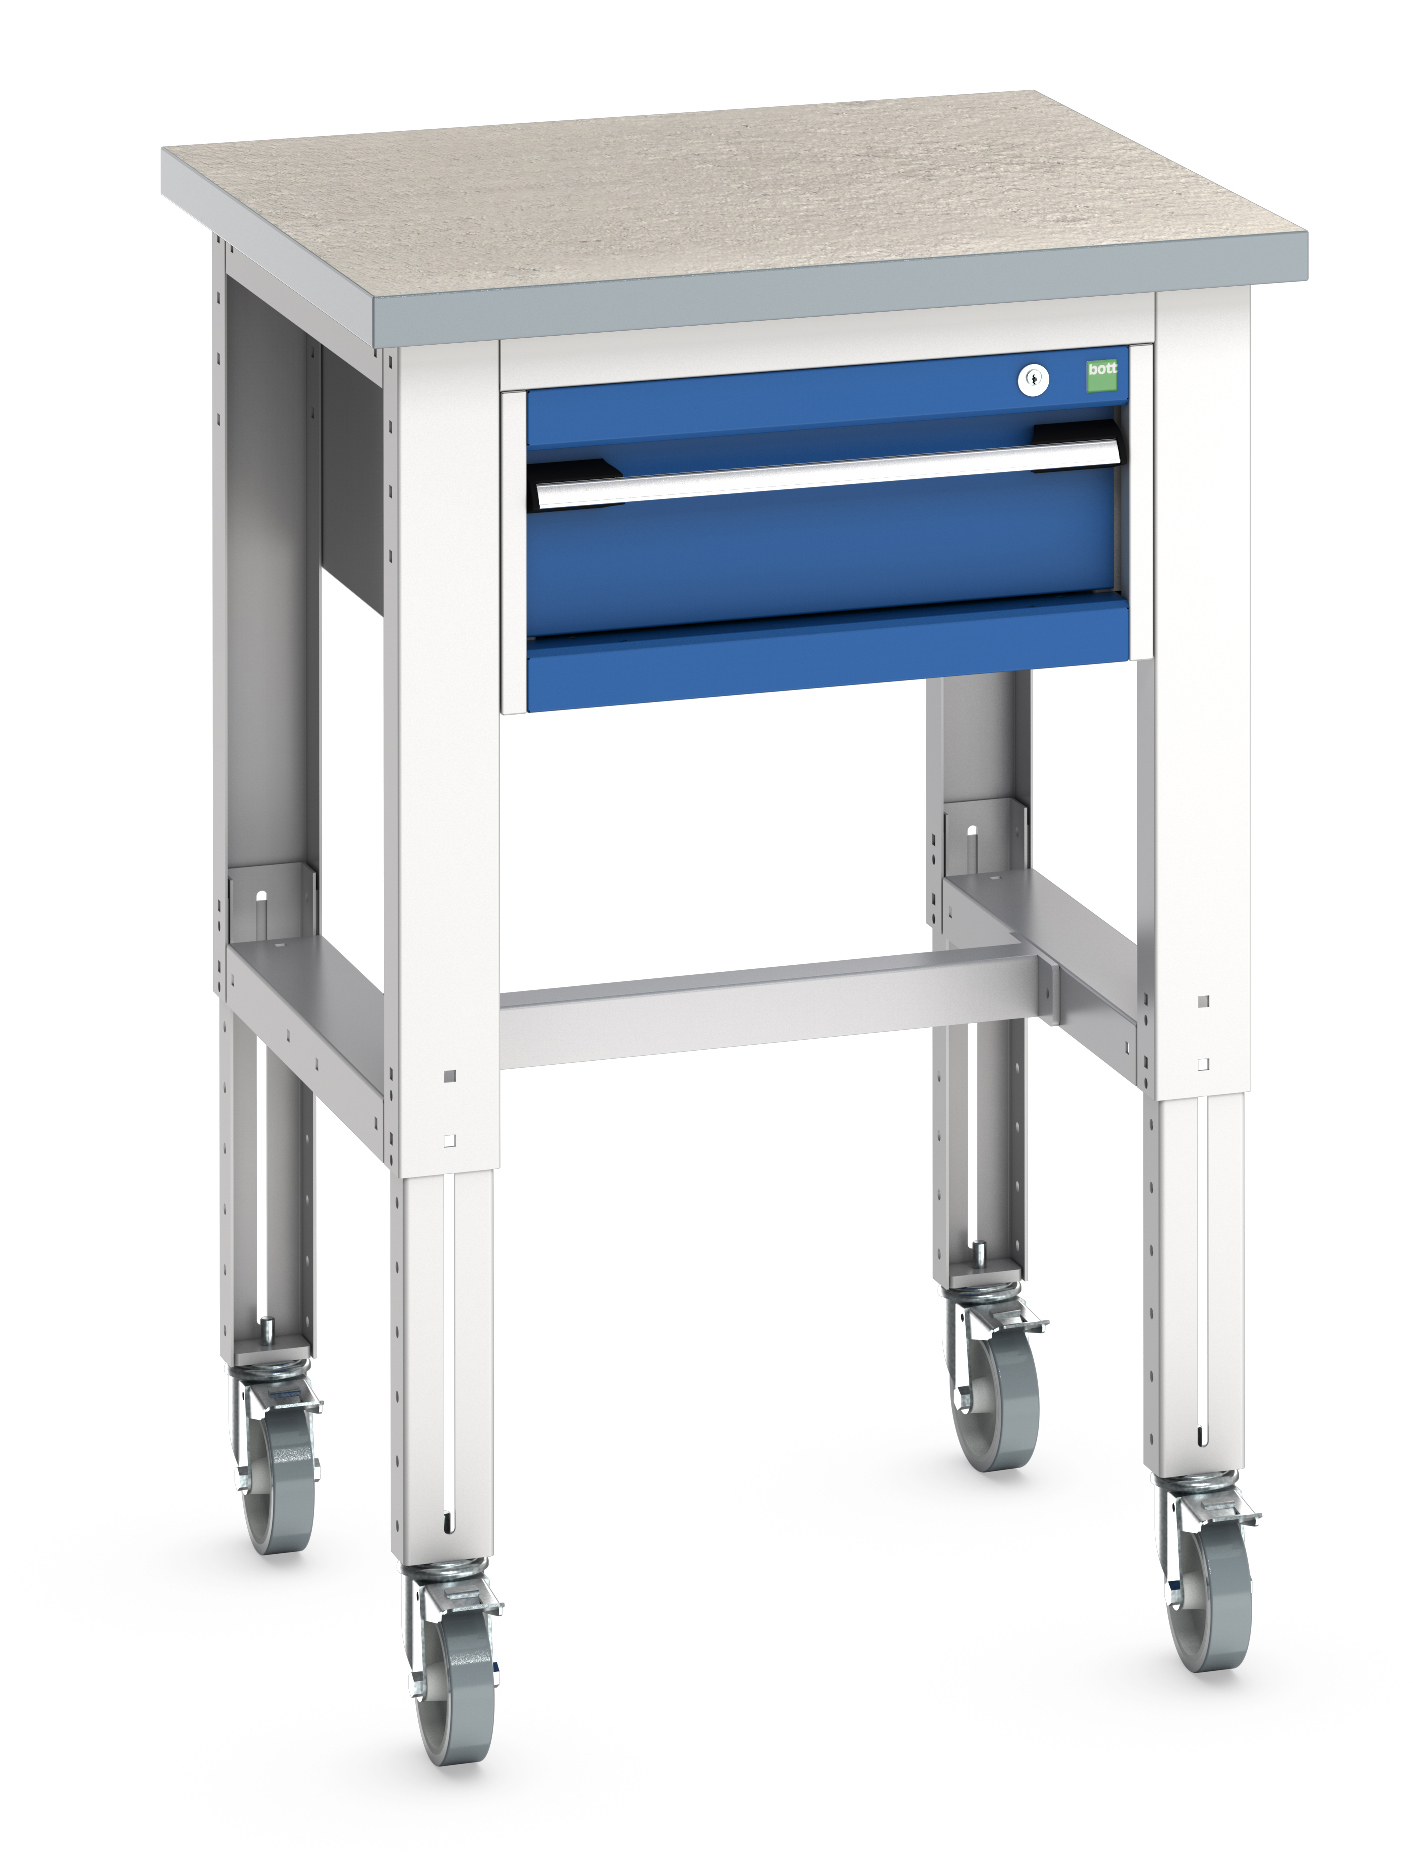 Bott Cubio Adjustable Height Mobile Workstand With 1 Drawer Cabinet - 41003273.11V